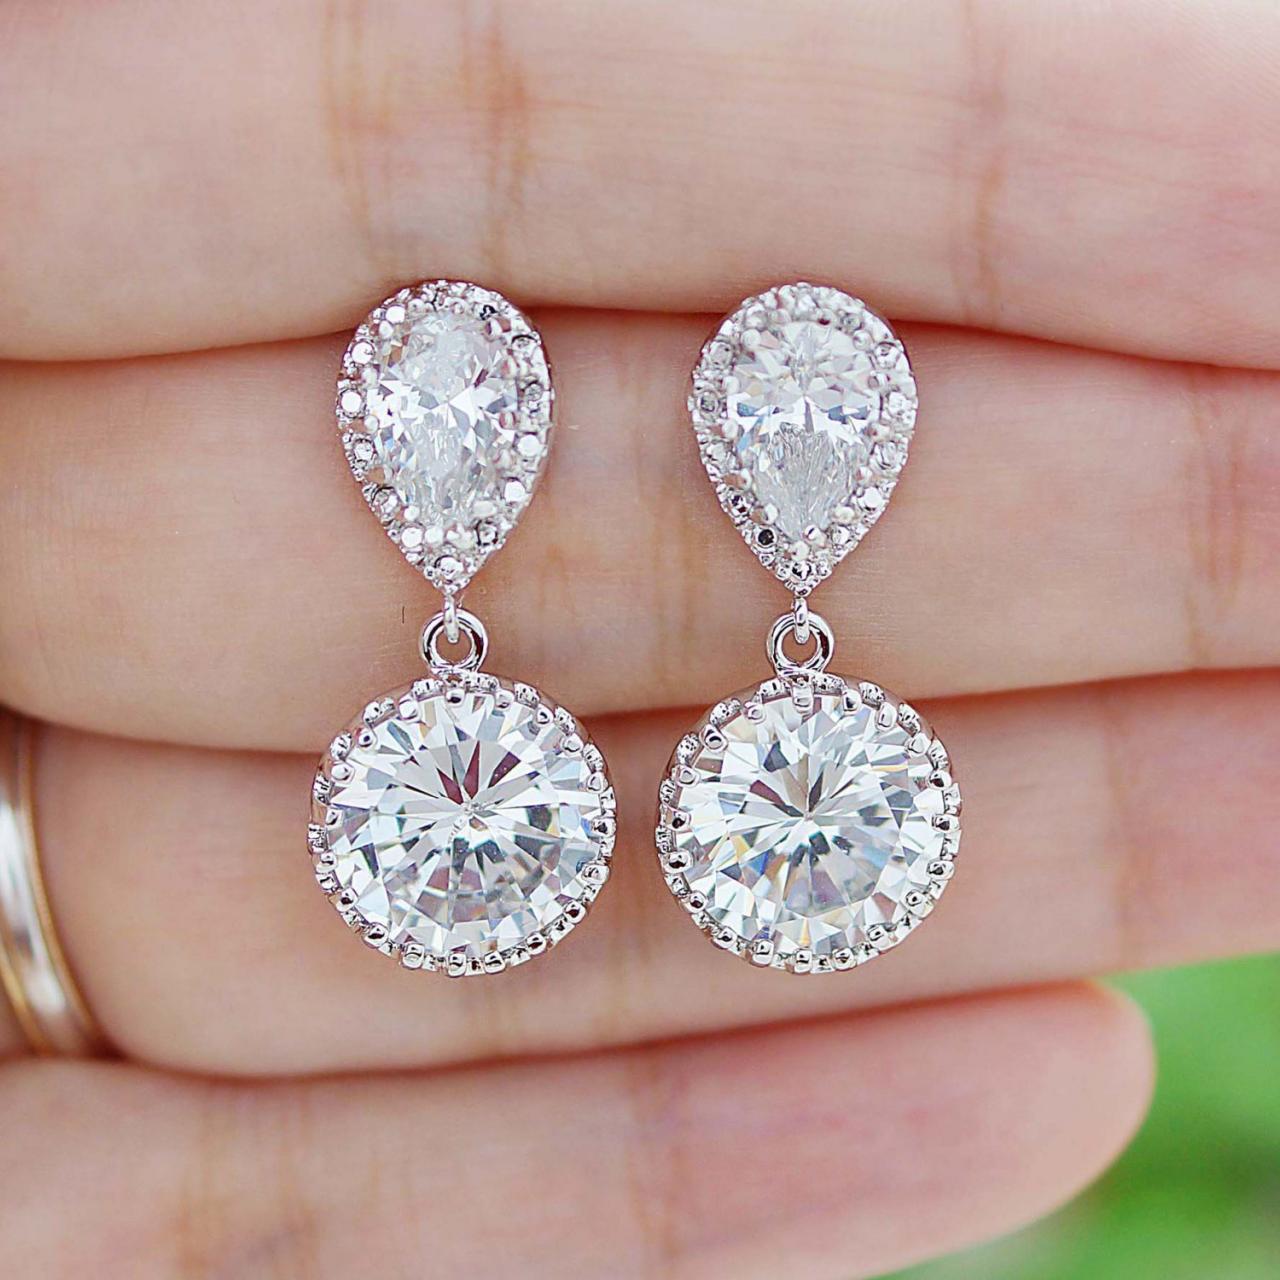 Bridal Earrings Round Cubic Zirconia Drop Earrings Dangle Earrings Wedding Jewelry Bridesmaid Gift Bridal Jewelry Wedding Earrings